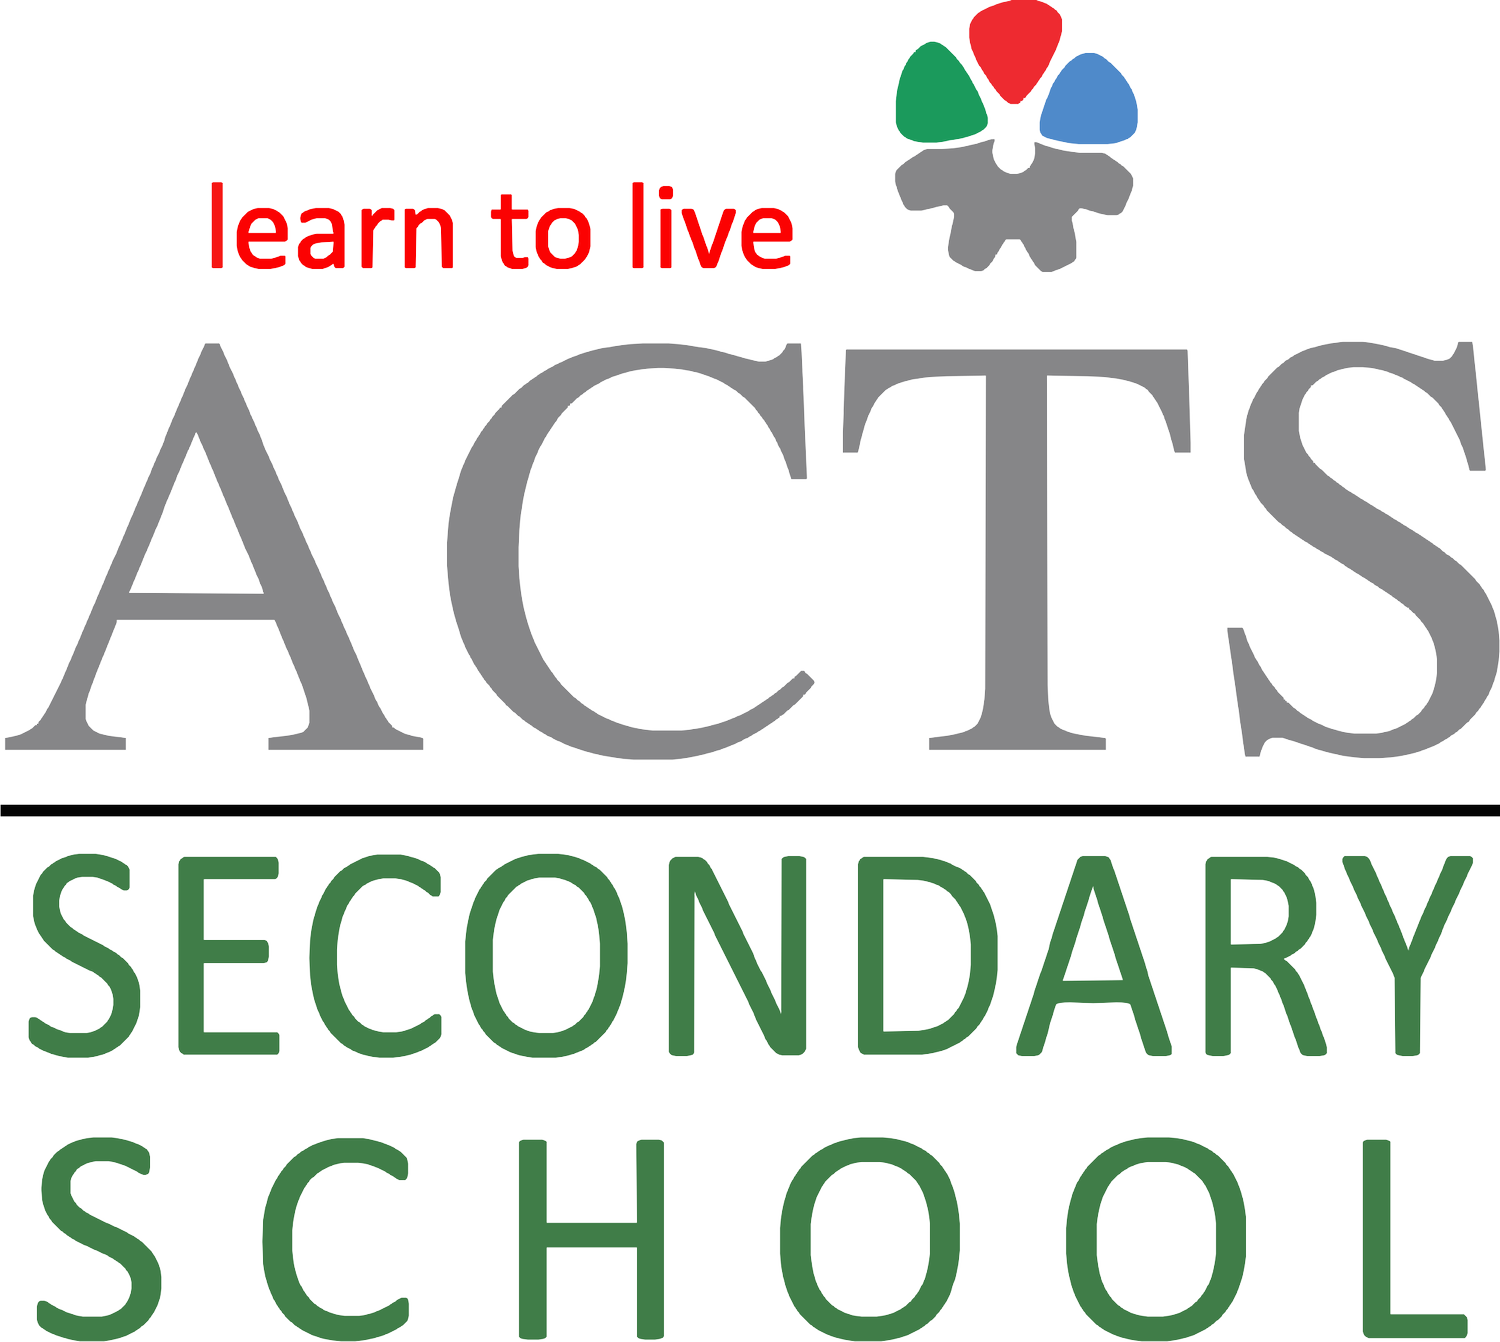 ACTS Secondary School